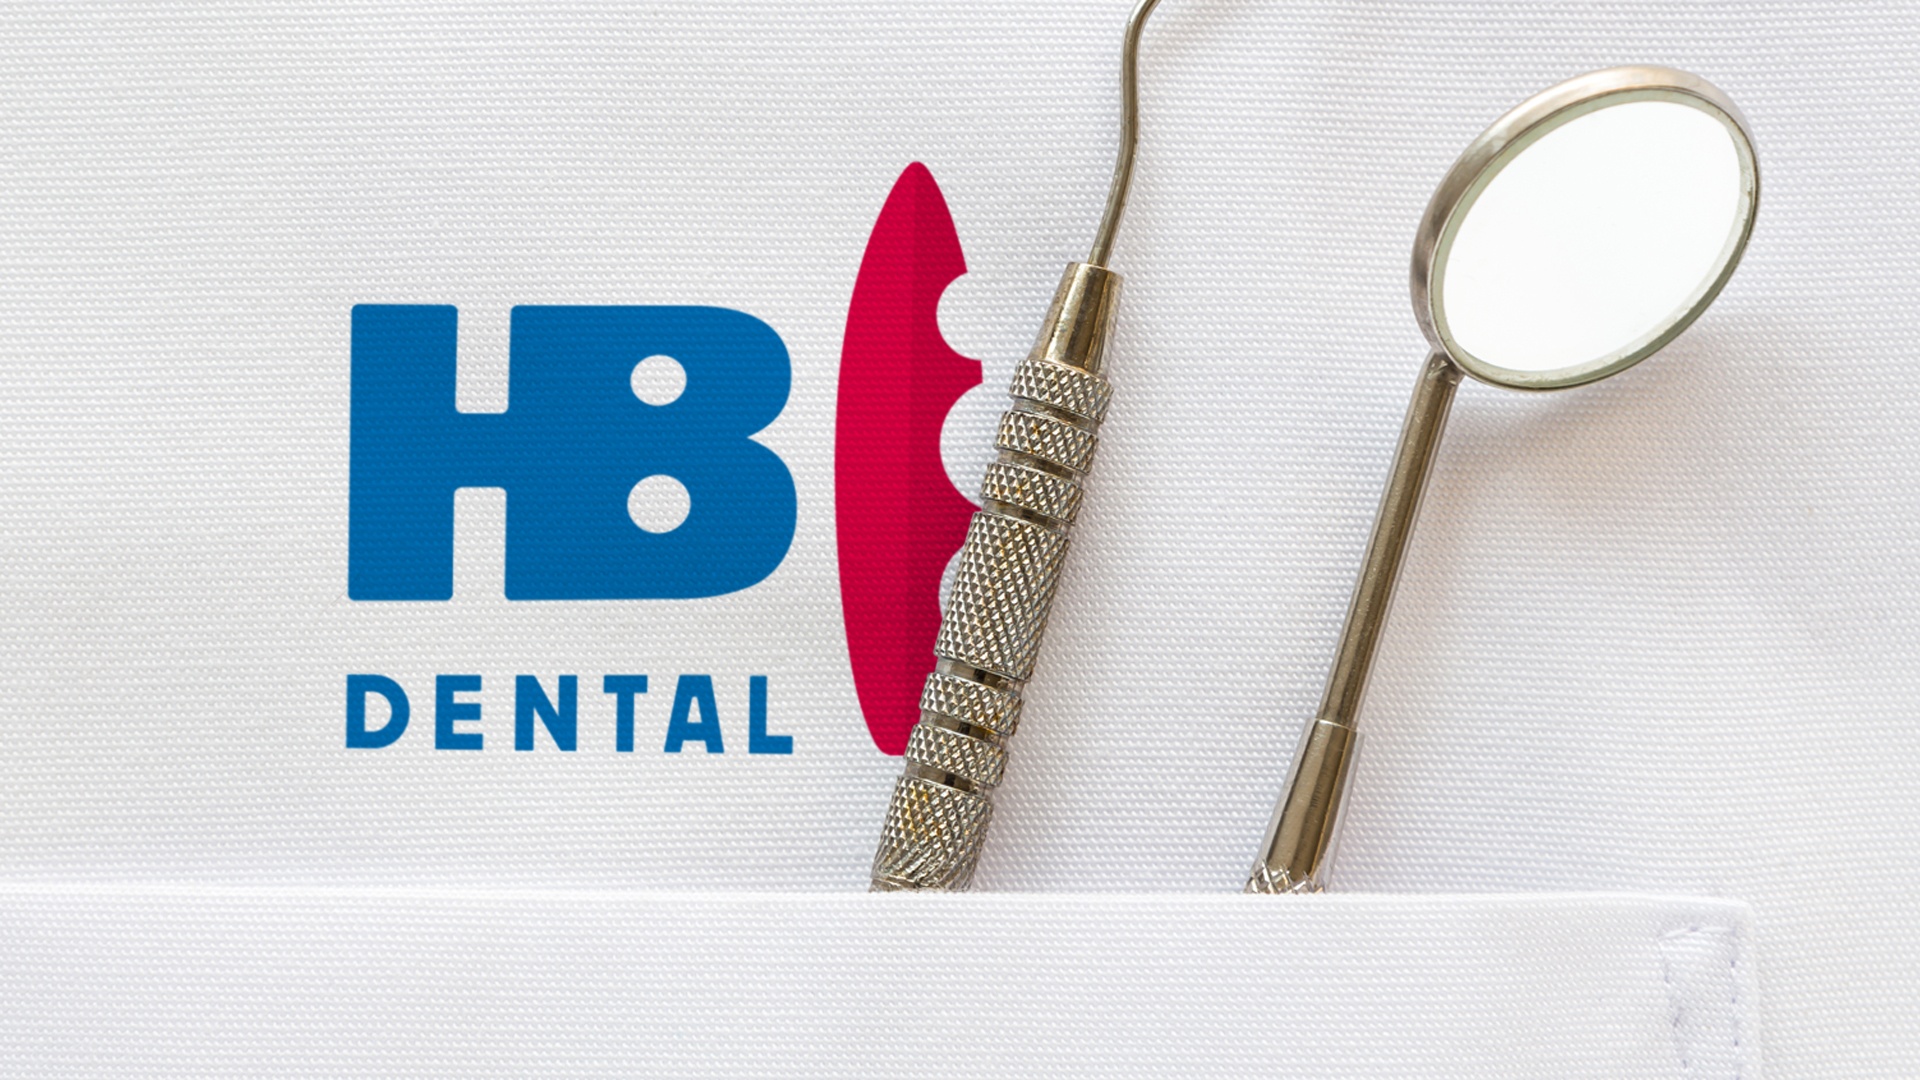 HB Dental